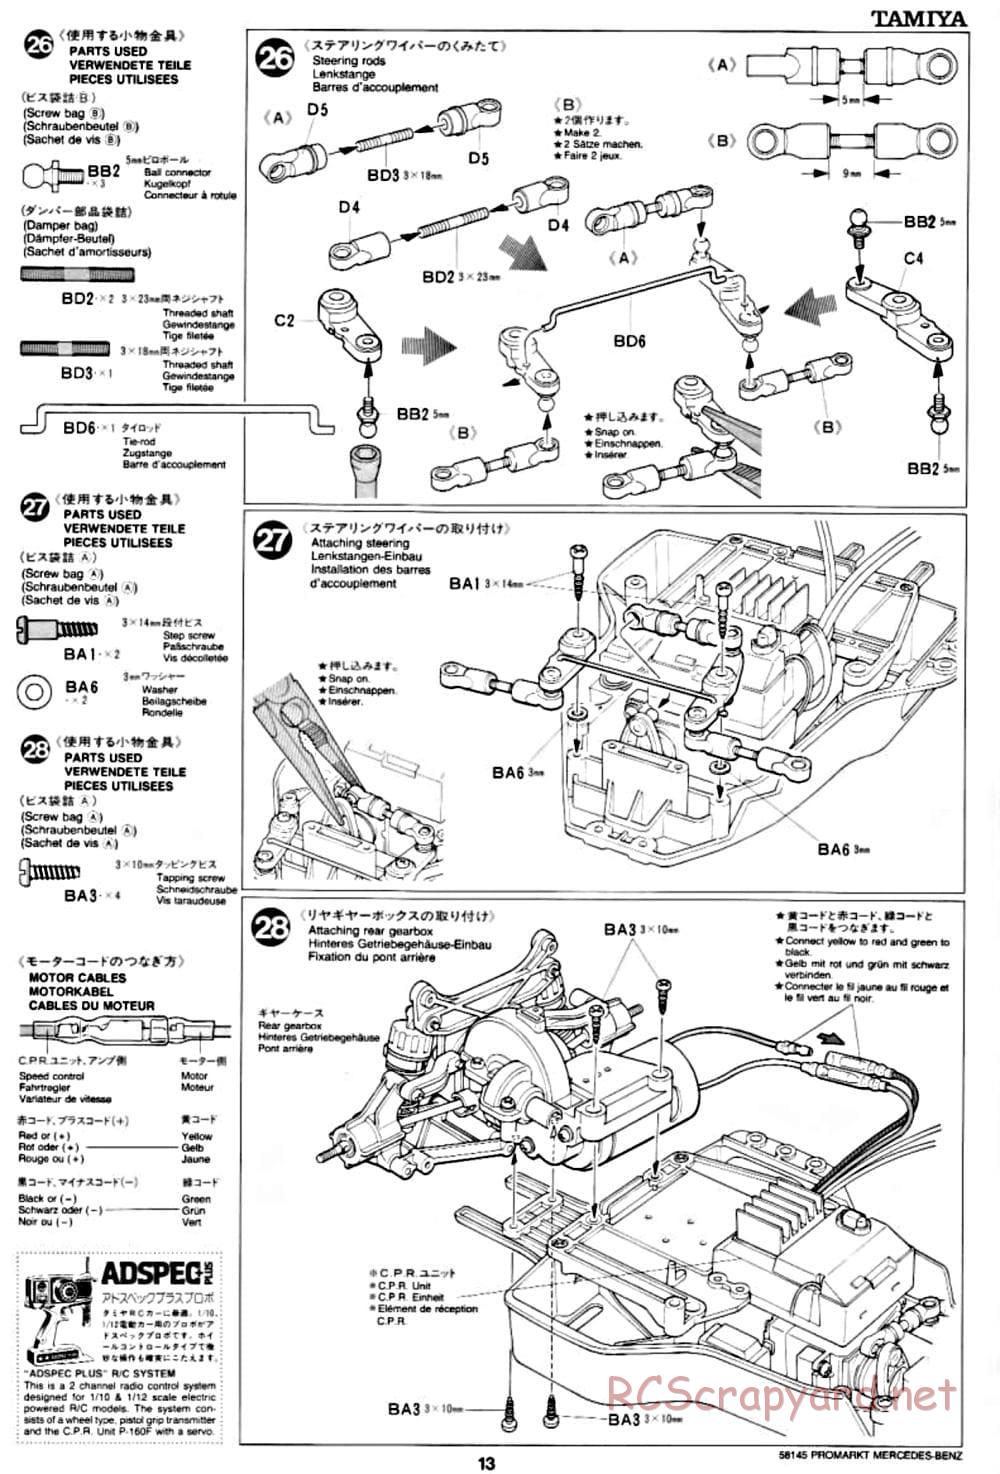 Tamiya - ProMarkt-Zakspeed AMG Mercedes C-Class DTM - TA-02 Chassis - Manual - Page 13